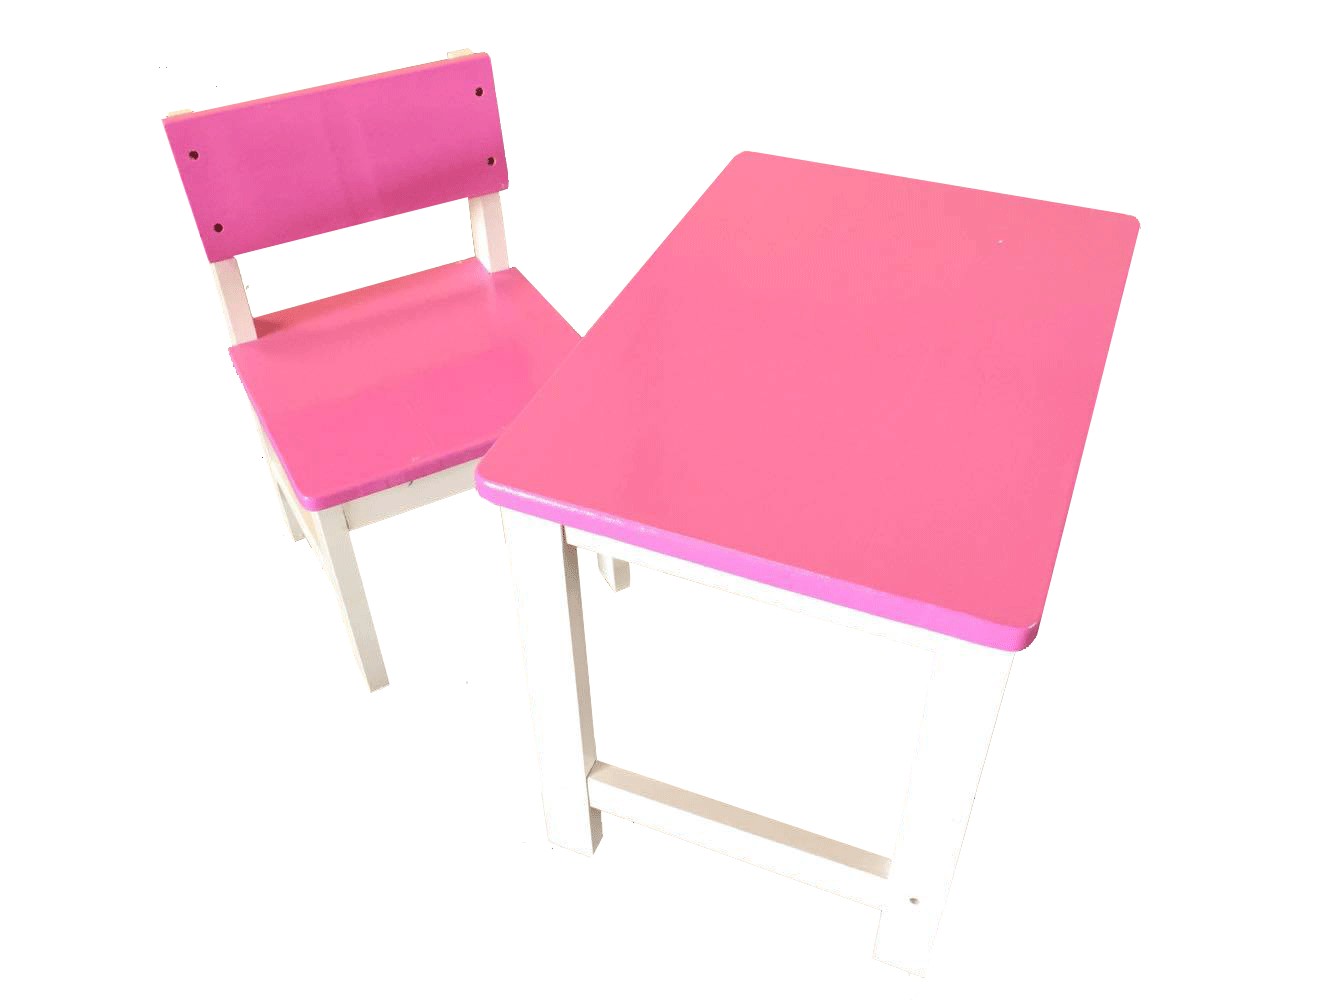 MD2-007 โต๊ะเก้าอี้นักเรียนไม้ยางพาราสีสัน ระดับประถมศึกษา